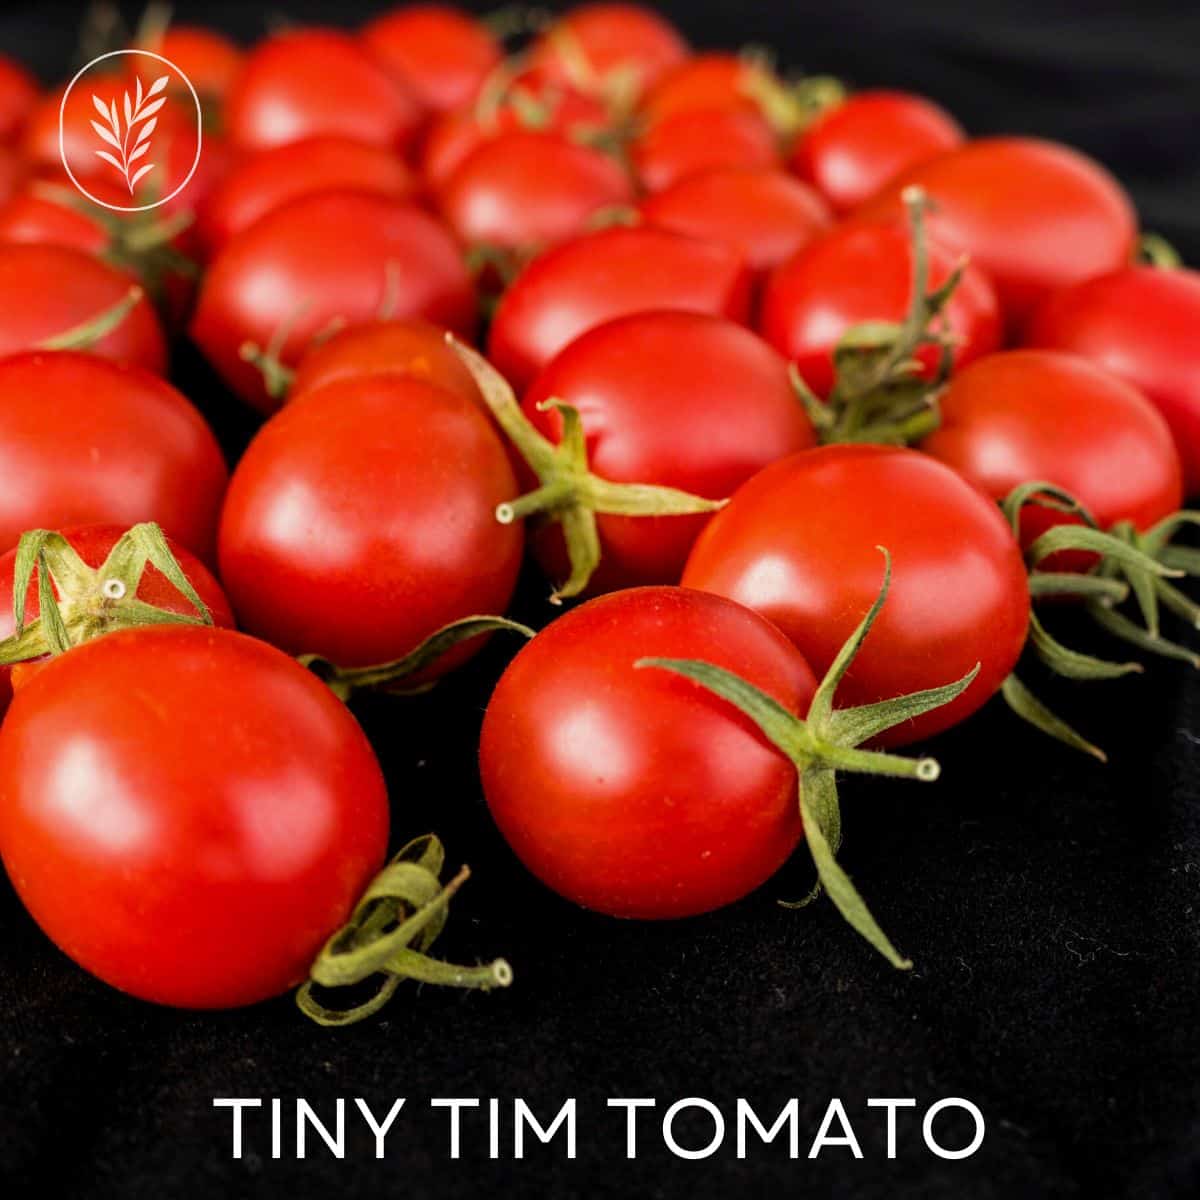 Tiny tim tomato via @home4theharvest